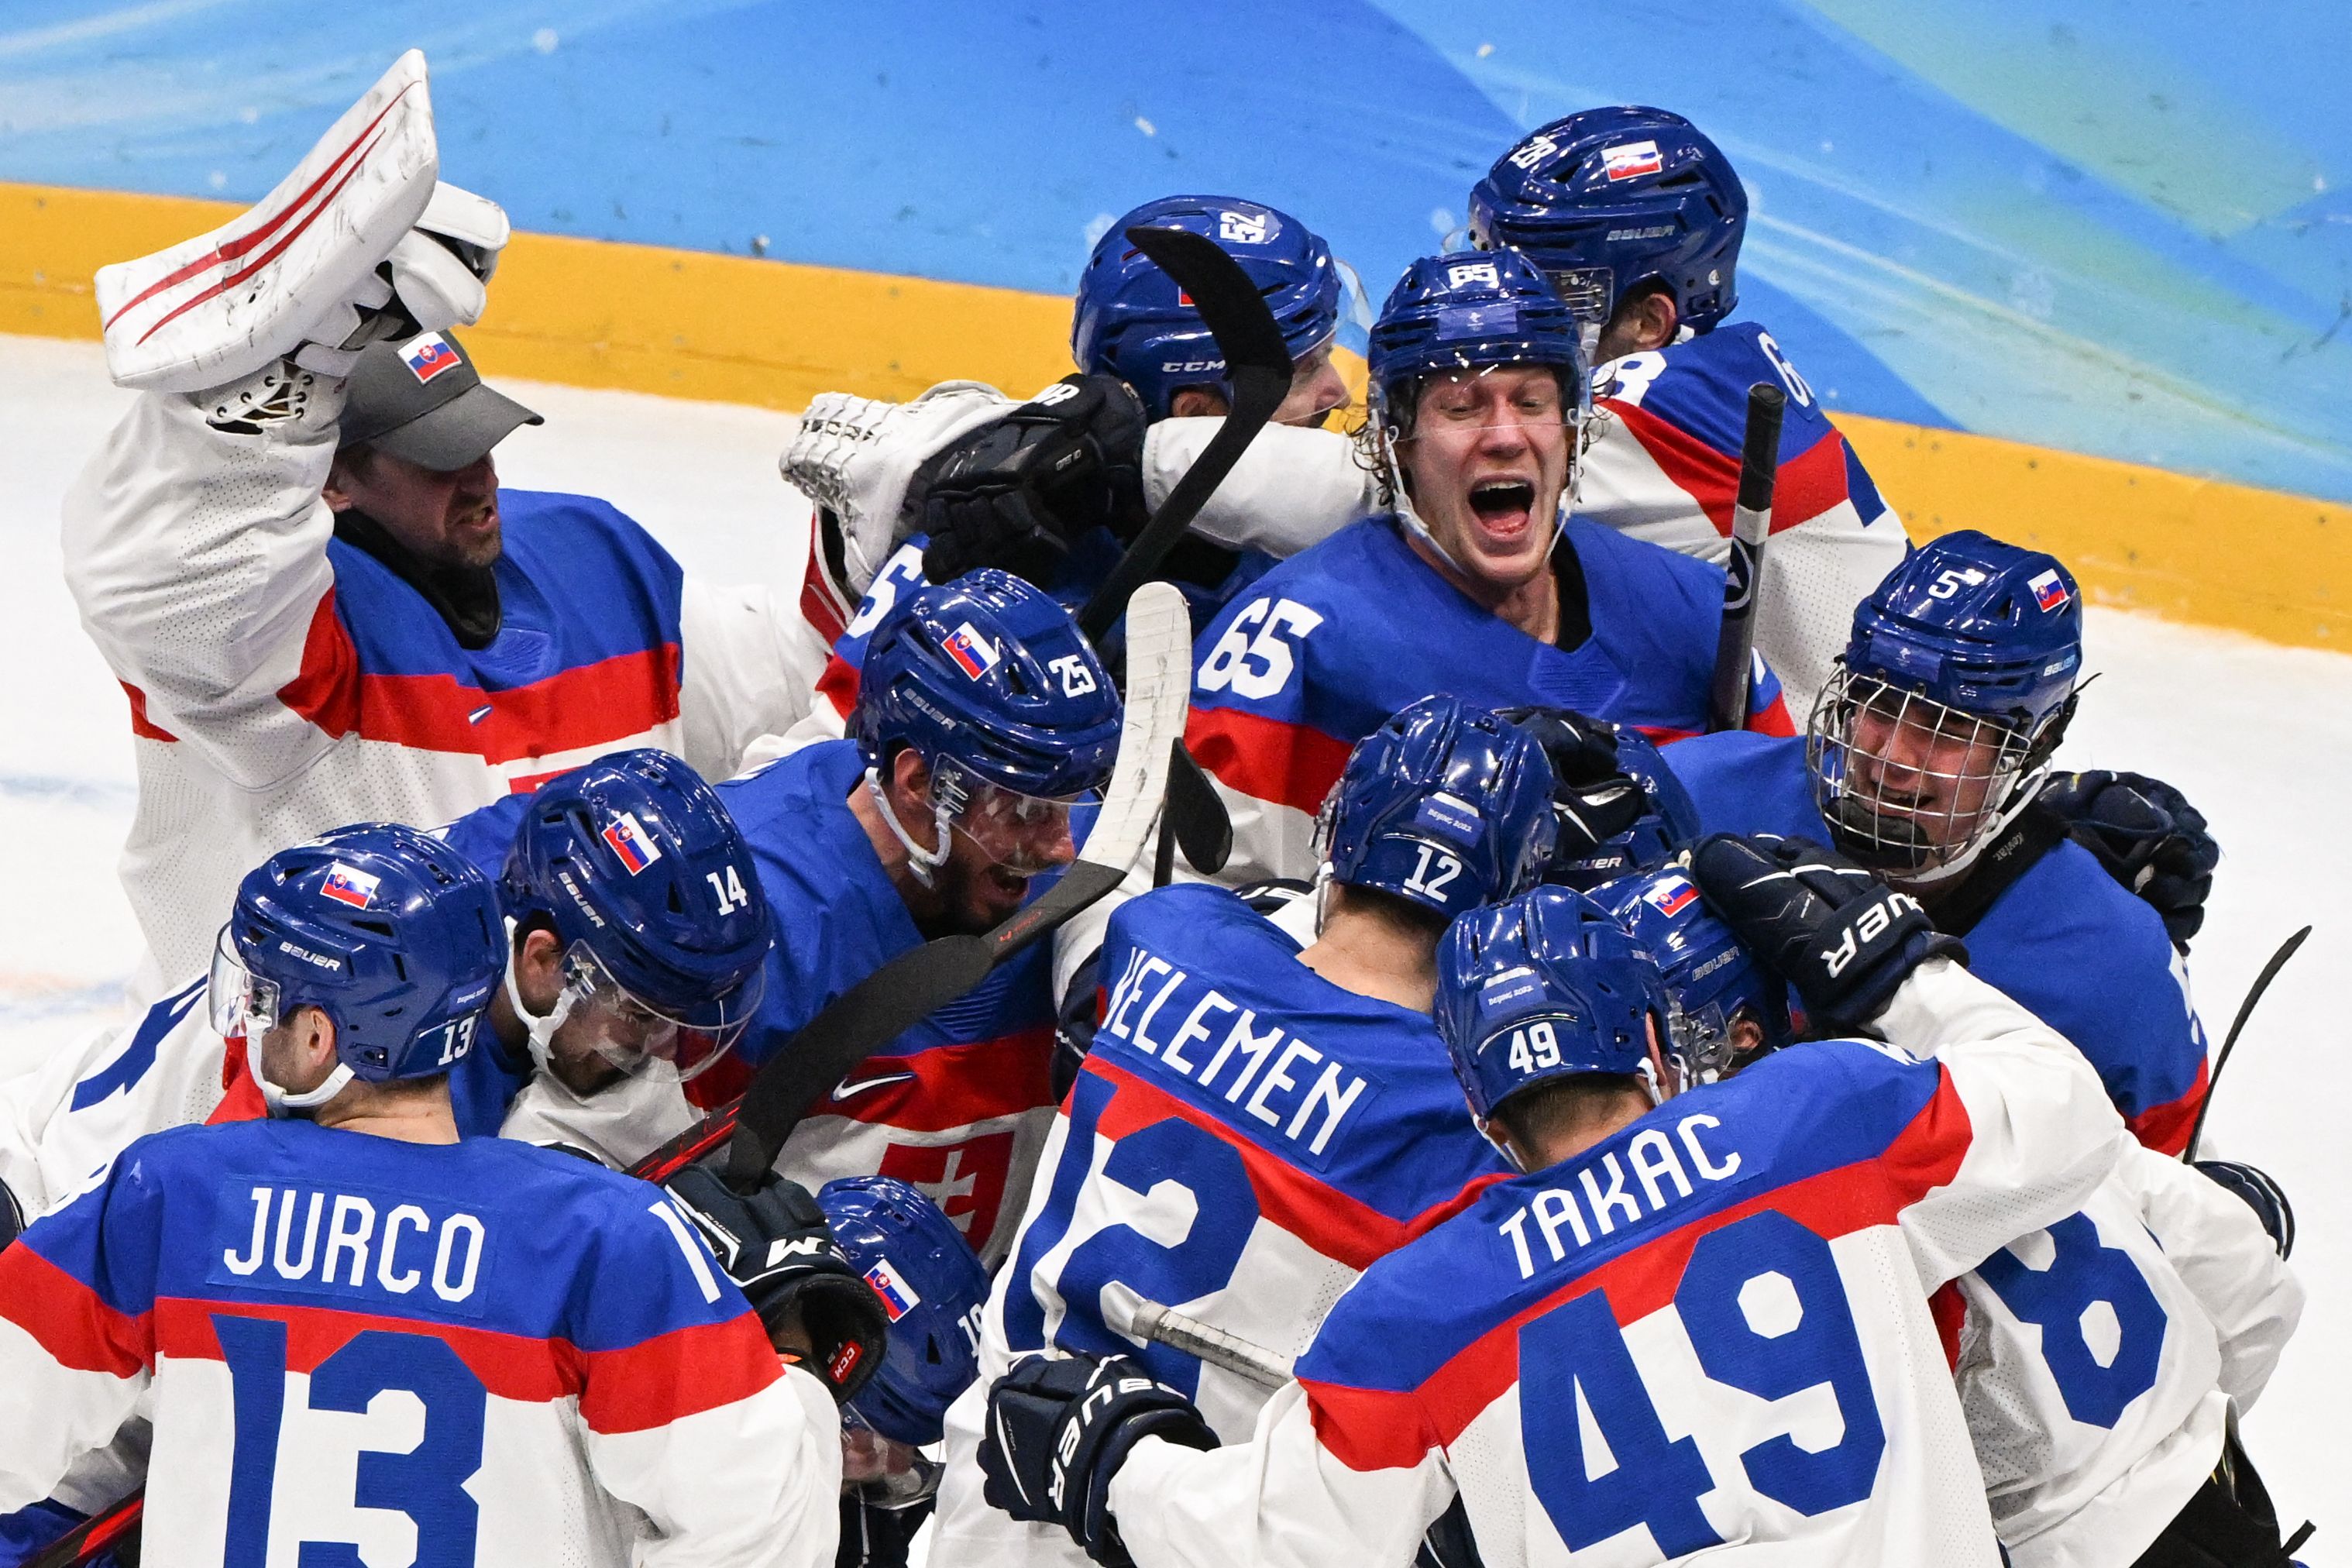 Team Slovakia celebrates after winning the men's ice hockey quarterfinal match against Team USA on Wednesday.